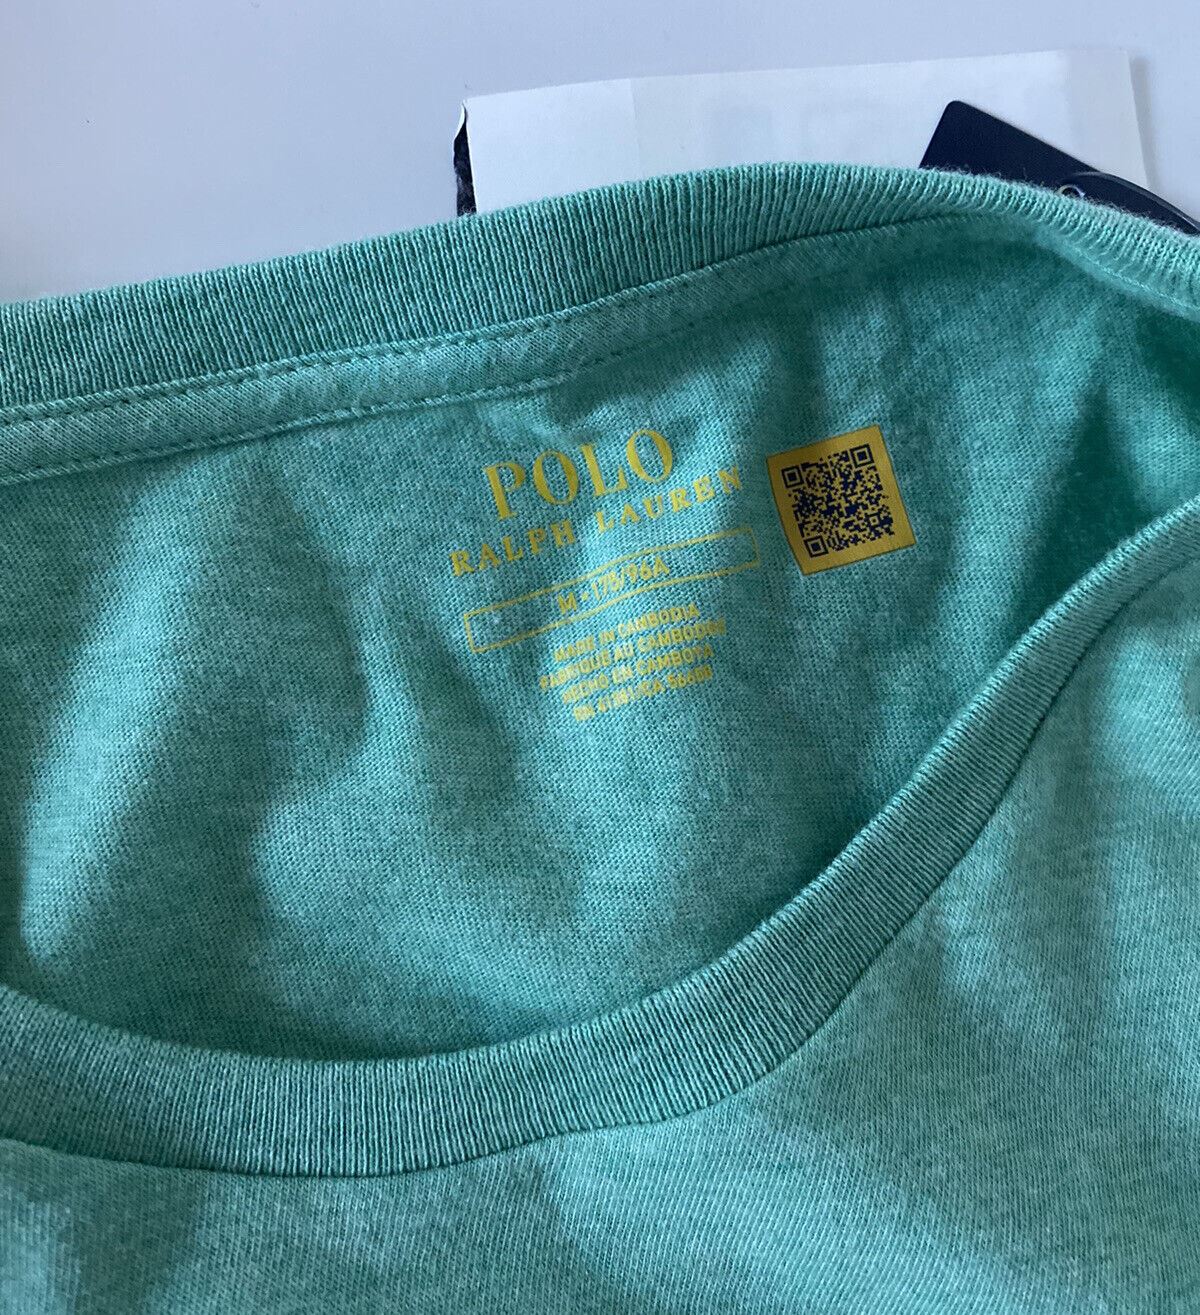 Хлопковая футболка с короткими рукавами NWT Polo Ralph Lauren, зеленая, средняя 